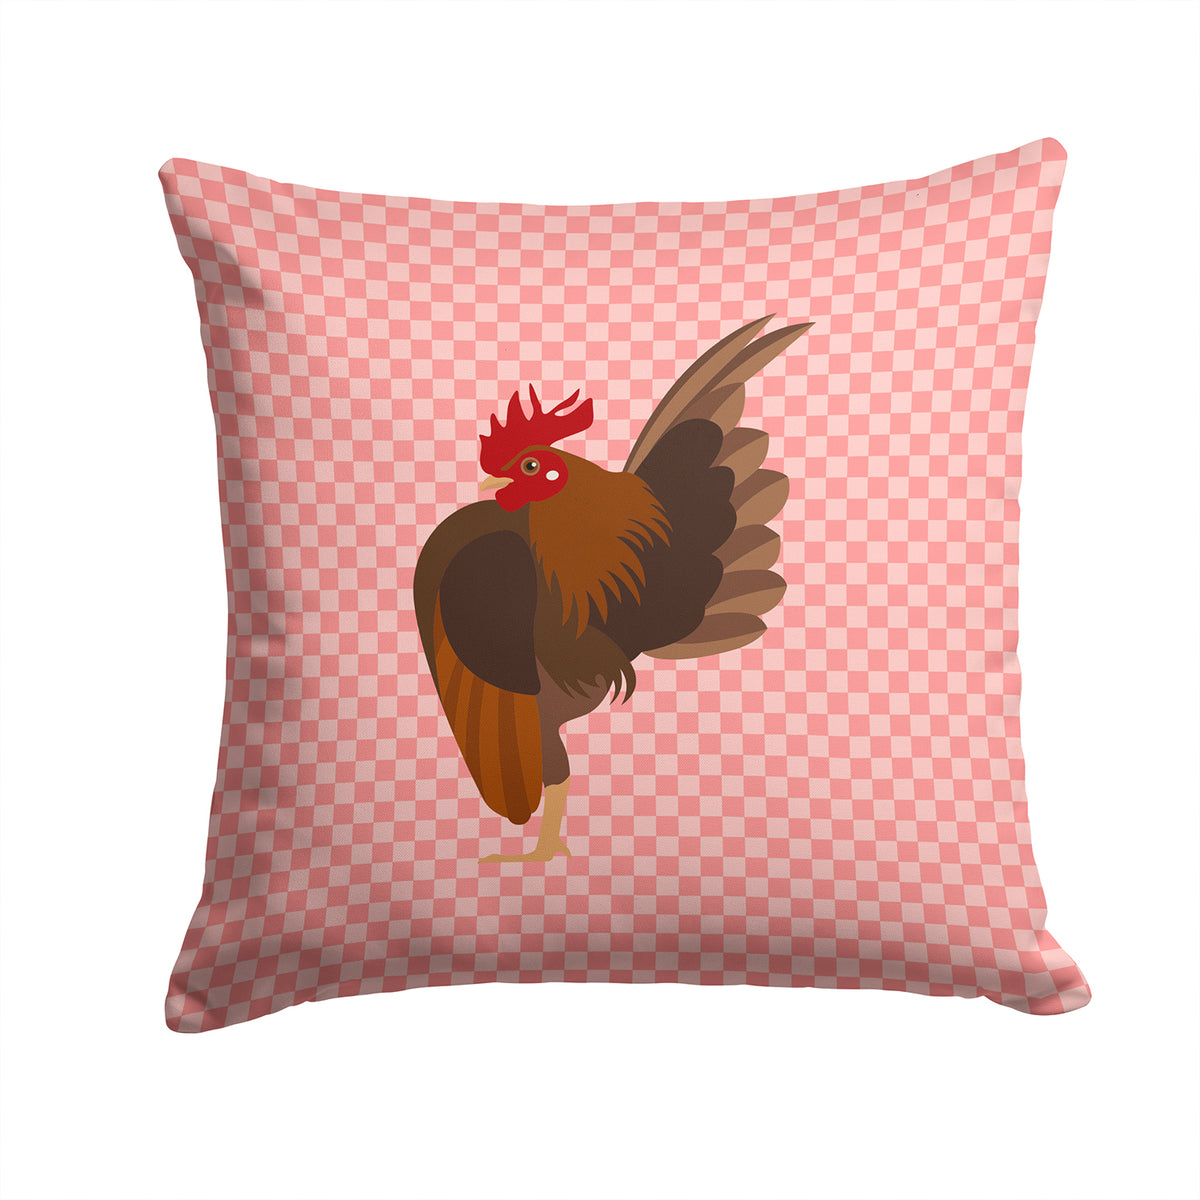 Malaysian Serama Chicken Pink Check Fabric Decorative Pillow BB7842PW1414 - the-store.com